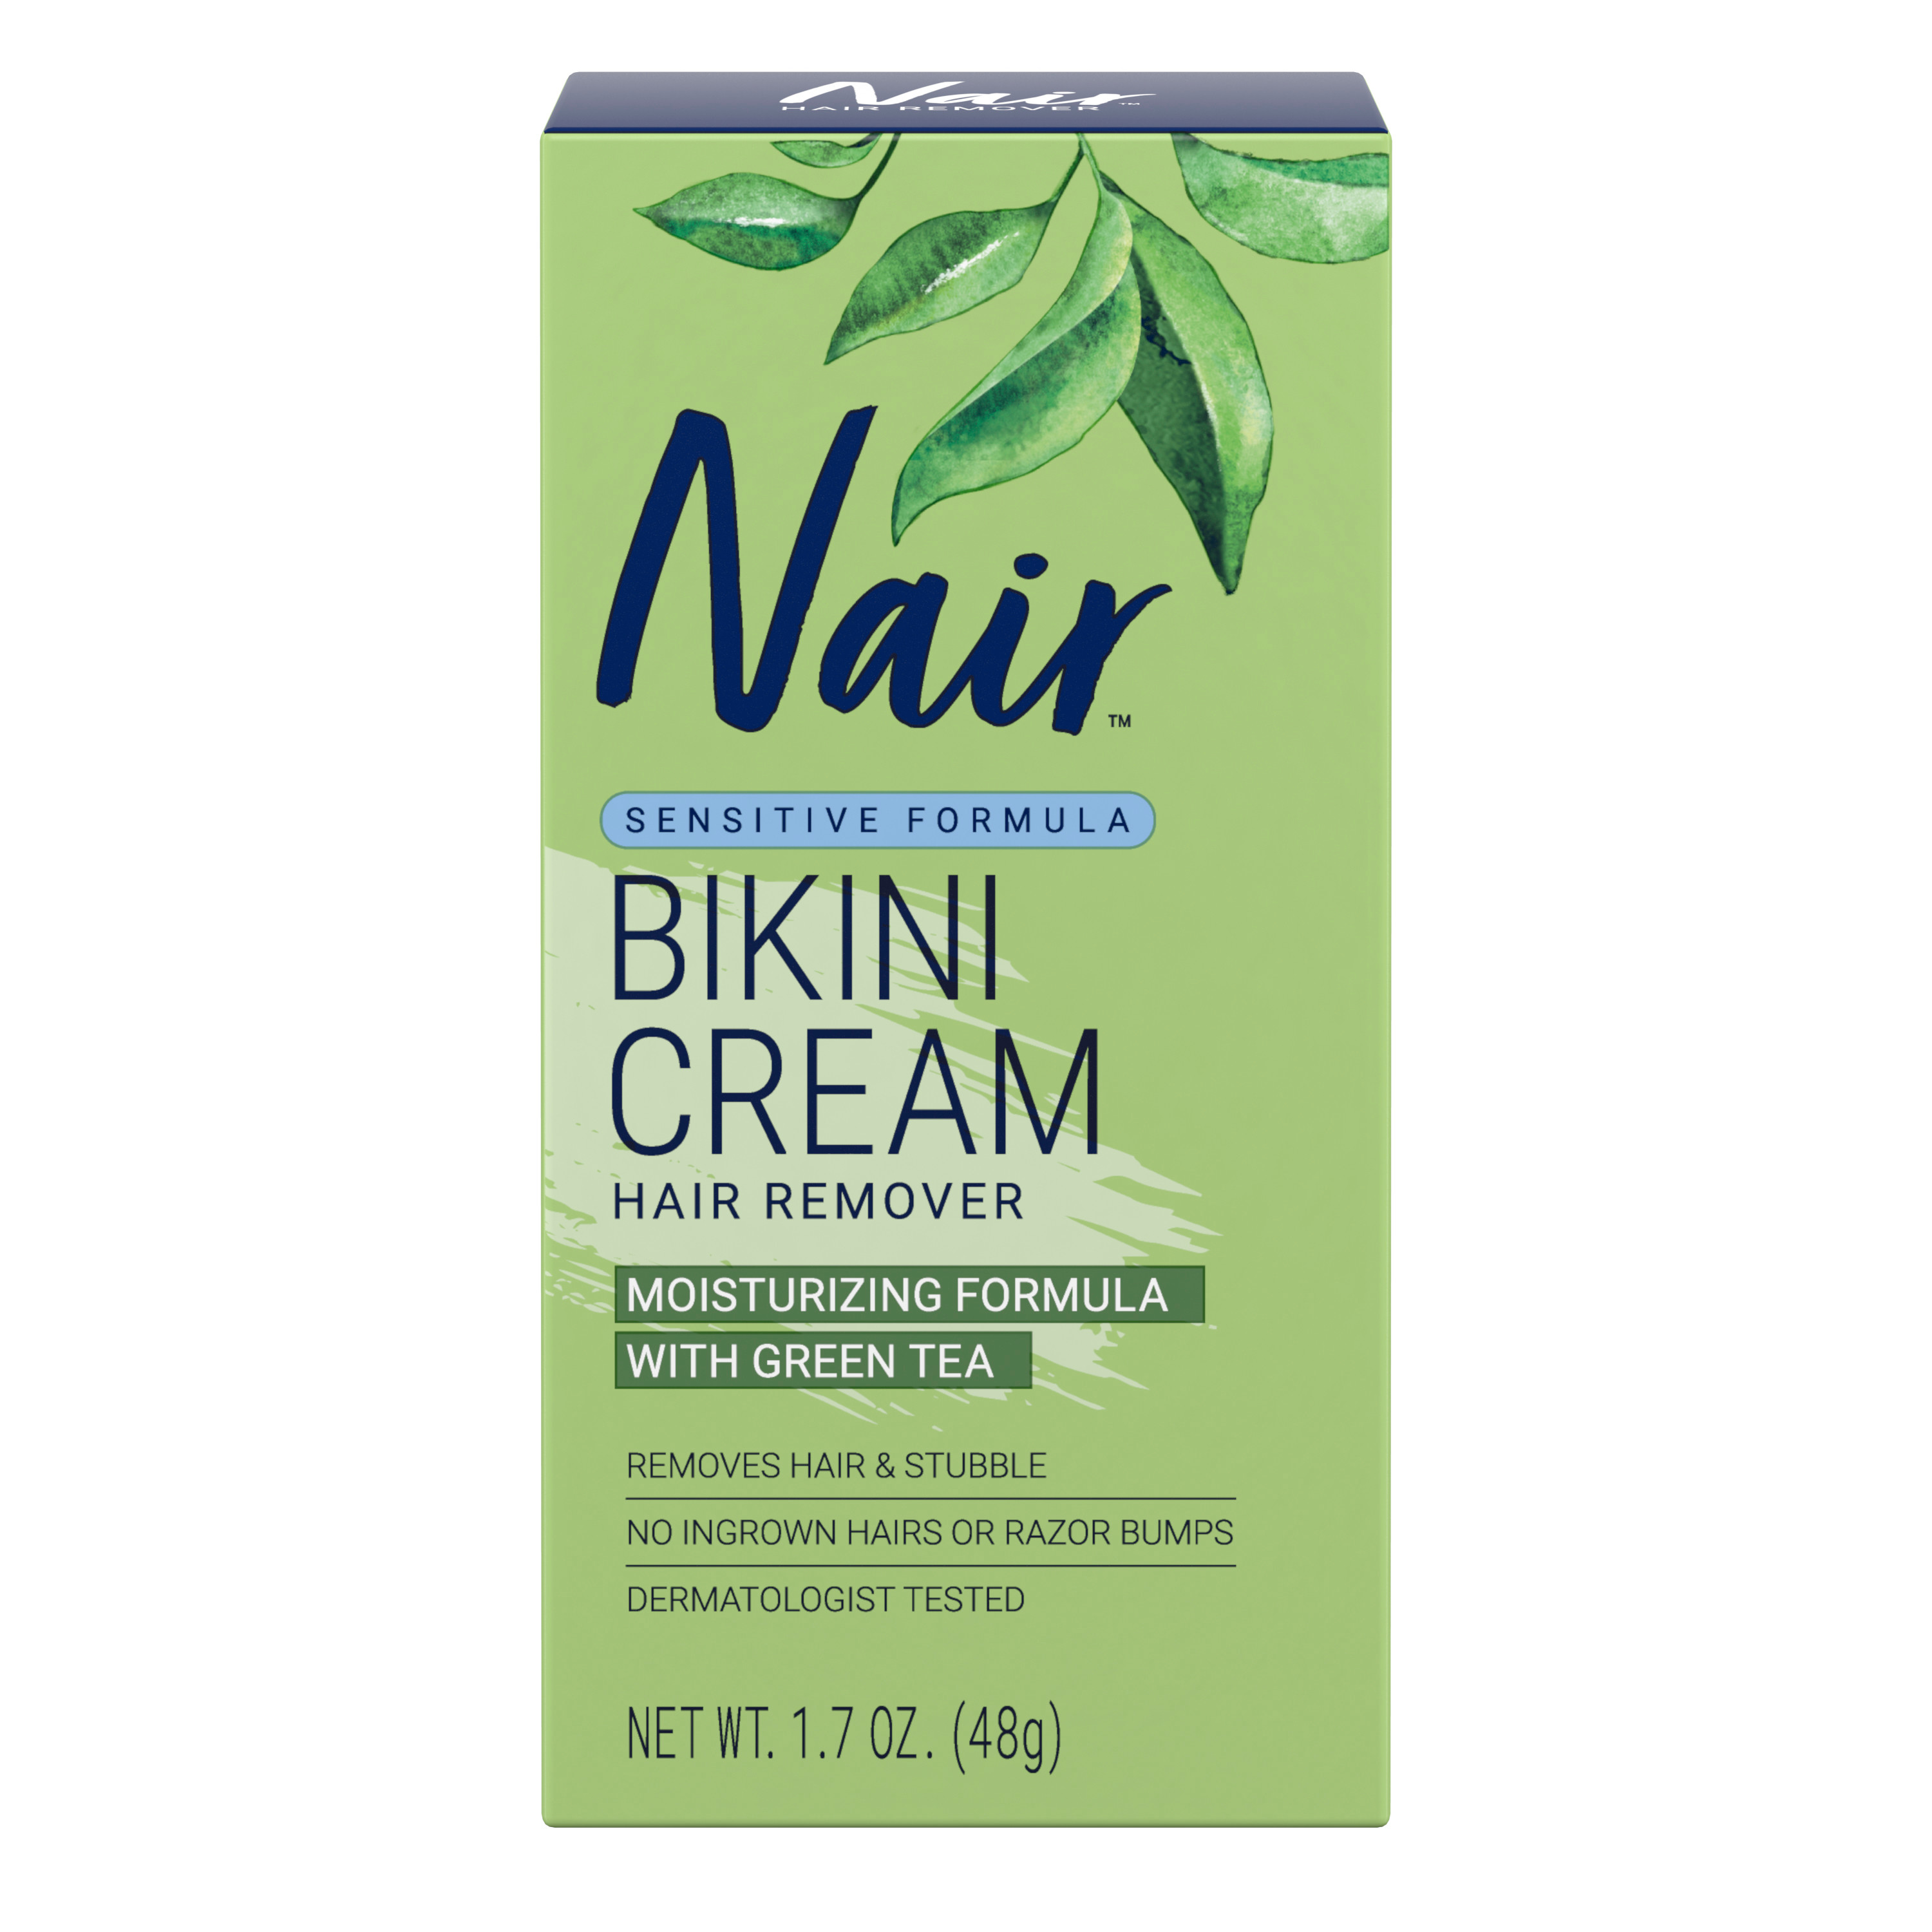 Nair Hair Remover Sensitive Formula Bikini Cream Hair Removal, 1.7 Oz Box - image 1 of 8